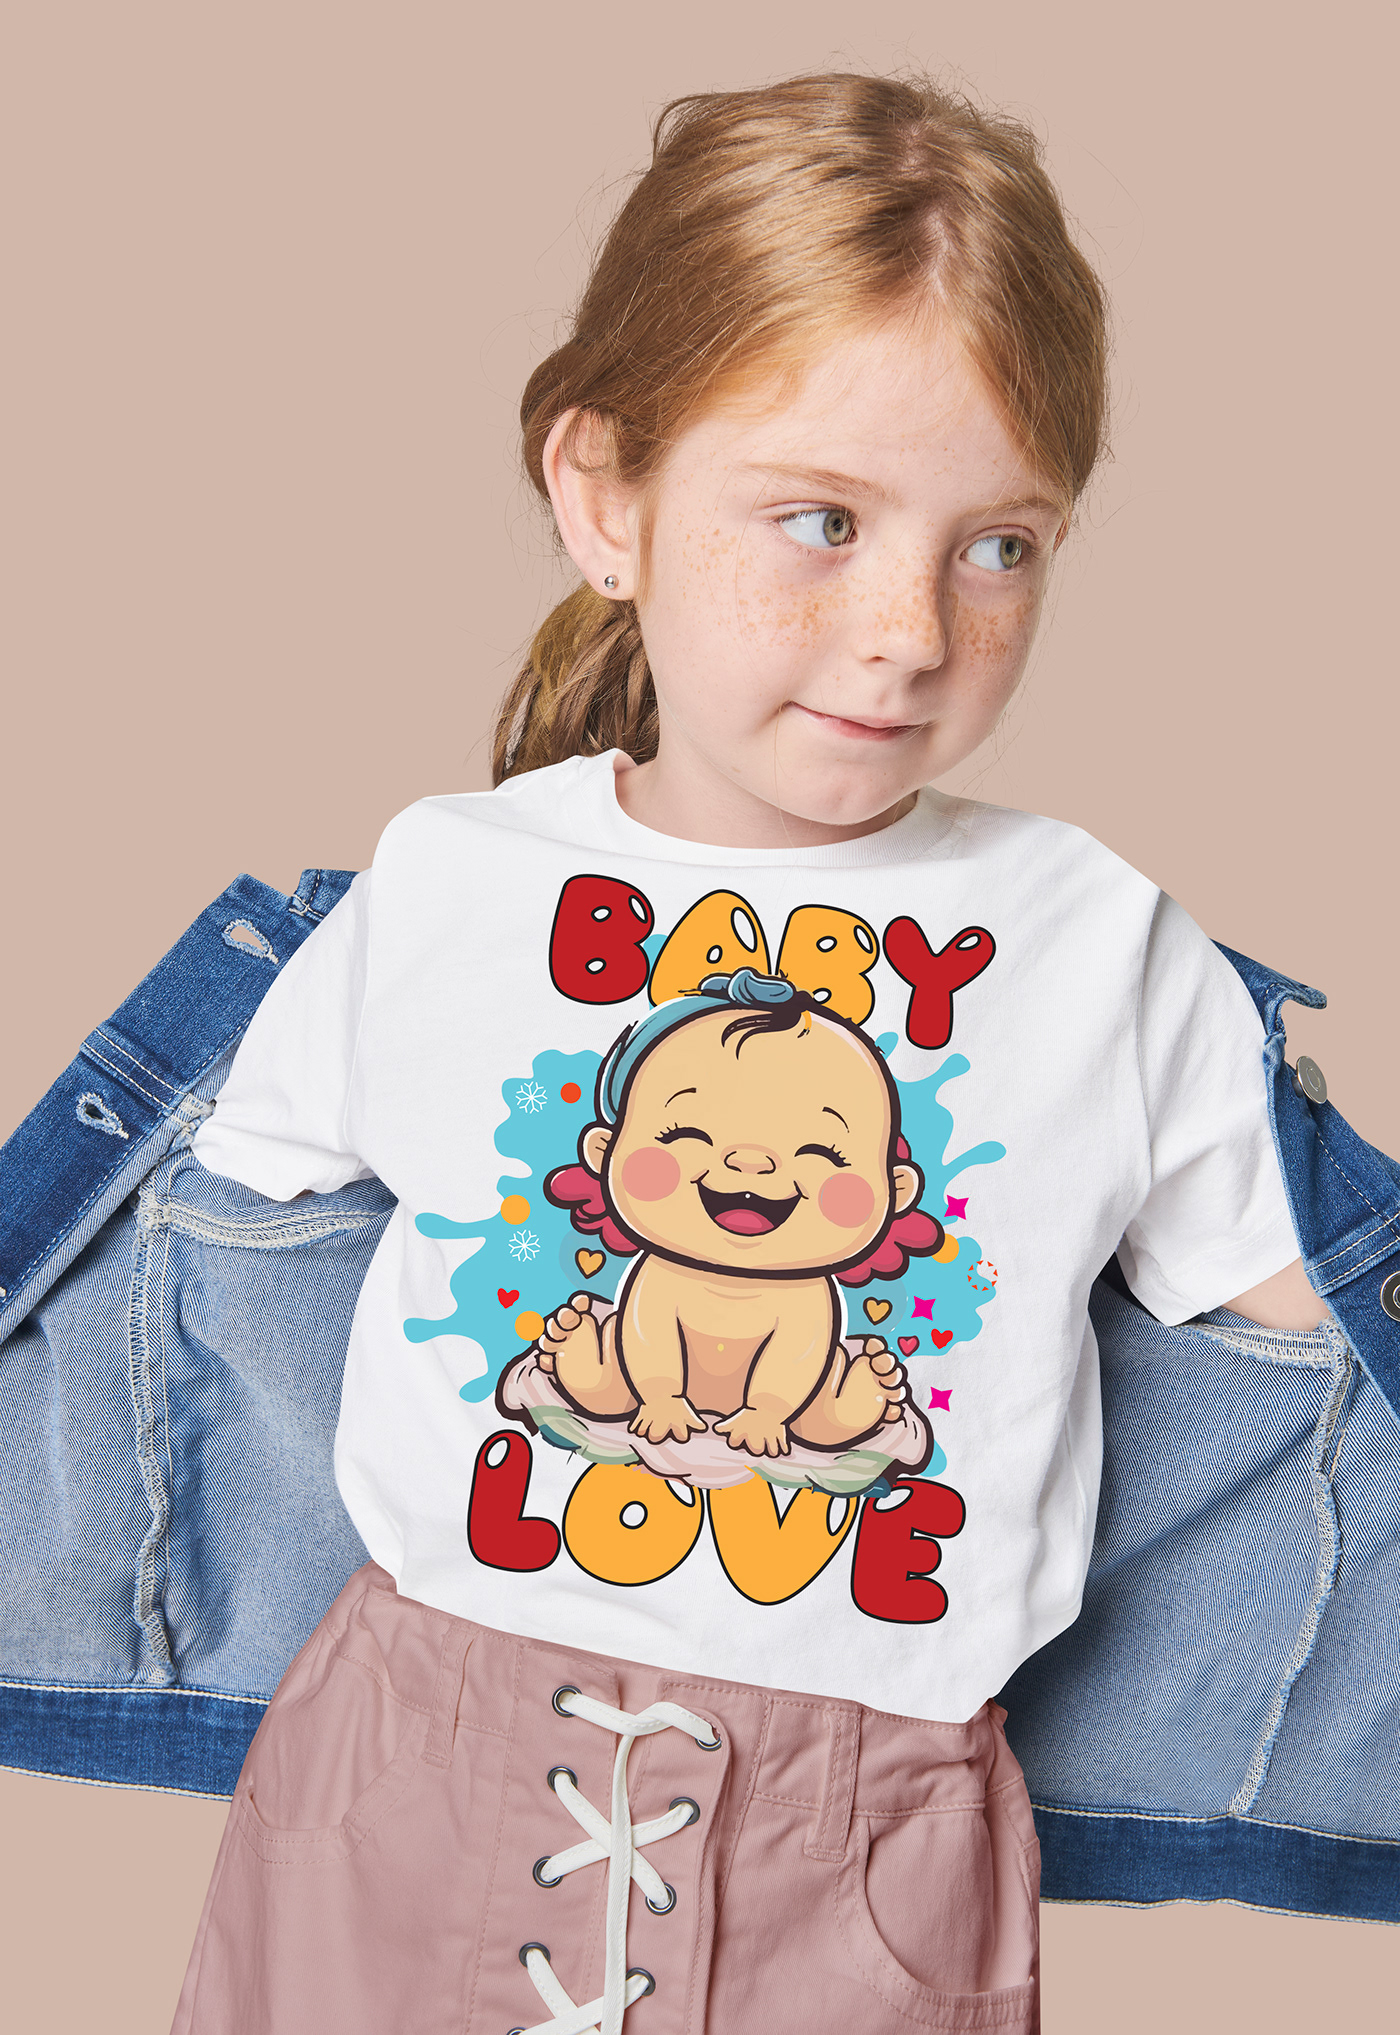 kidstshirt Kidsfashion tshirtdesign babytshirtdesign T-Shirt Design tshirt typography   Graphic Designer marketing   design